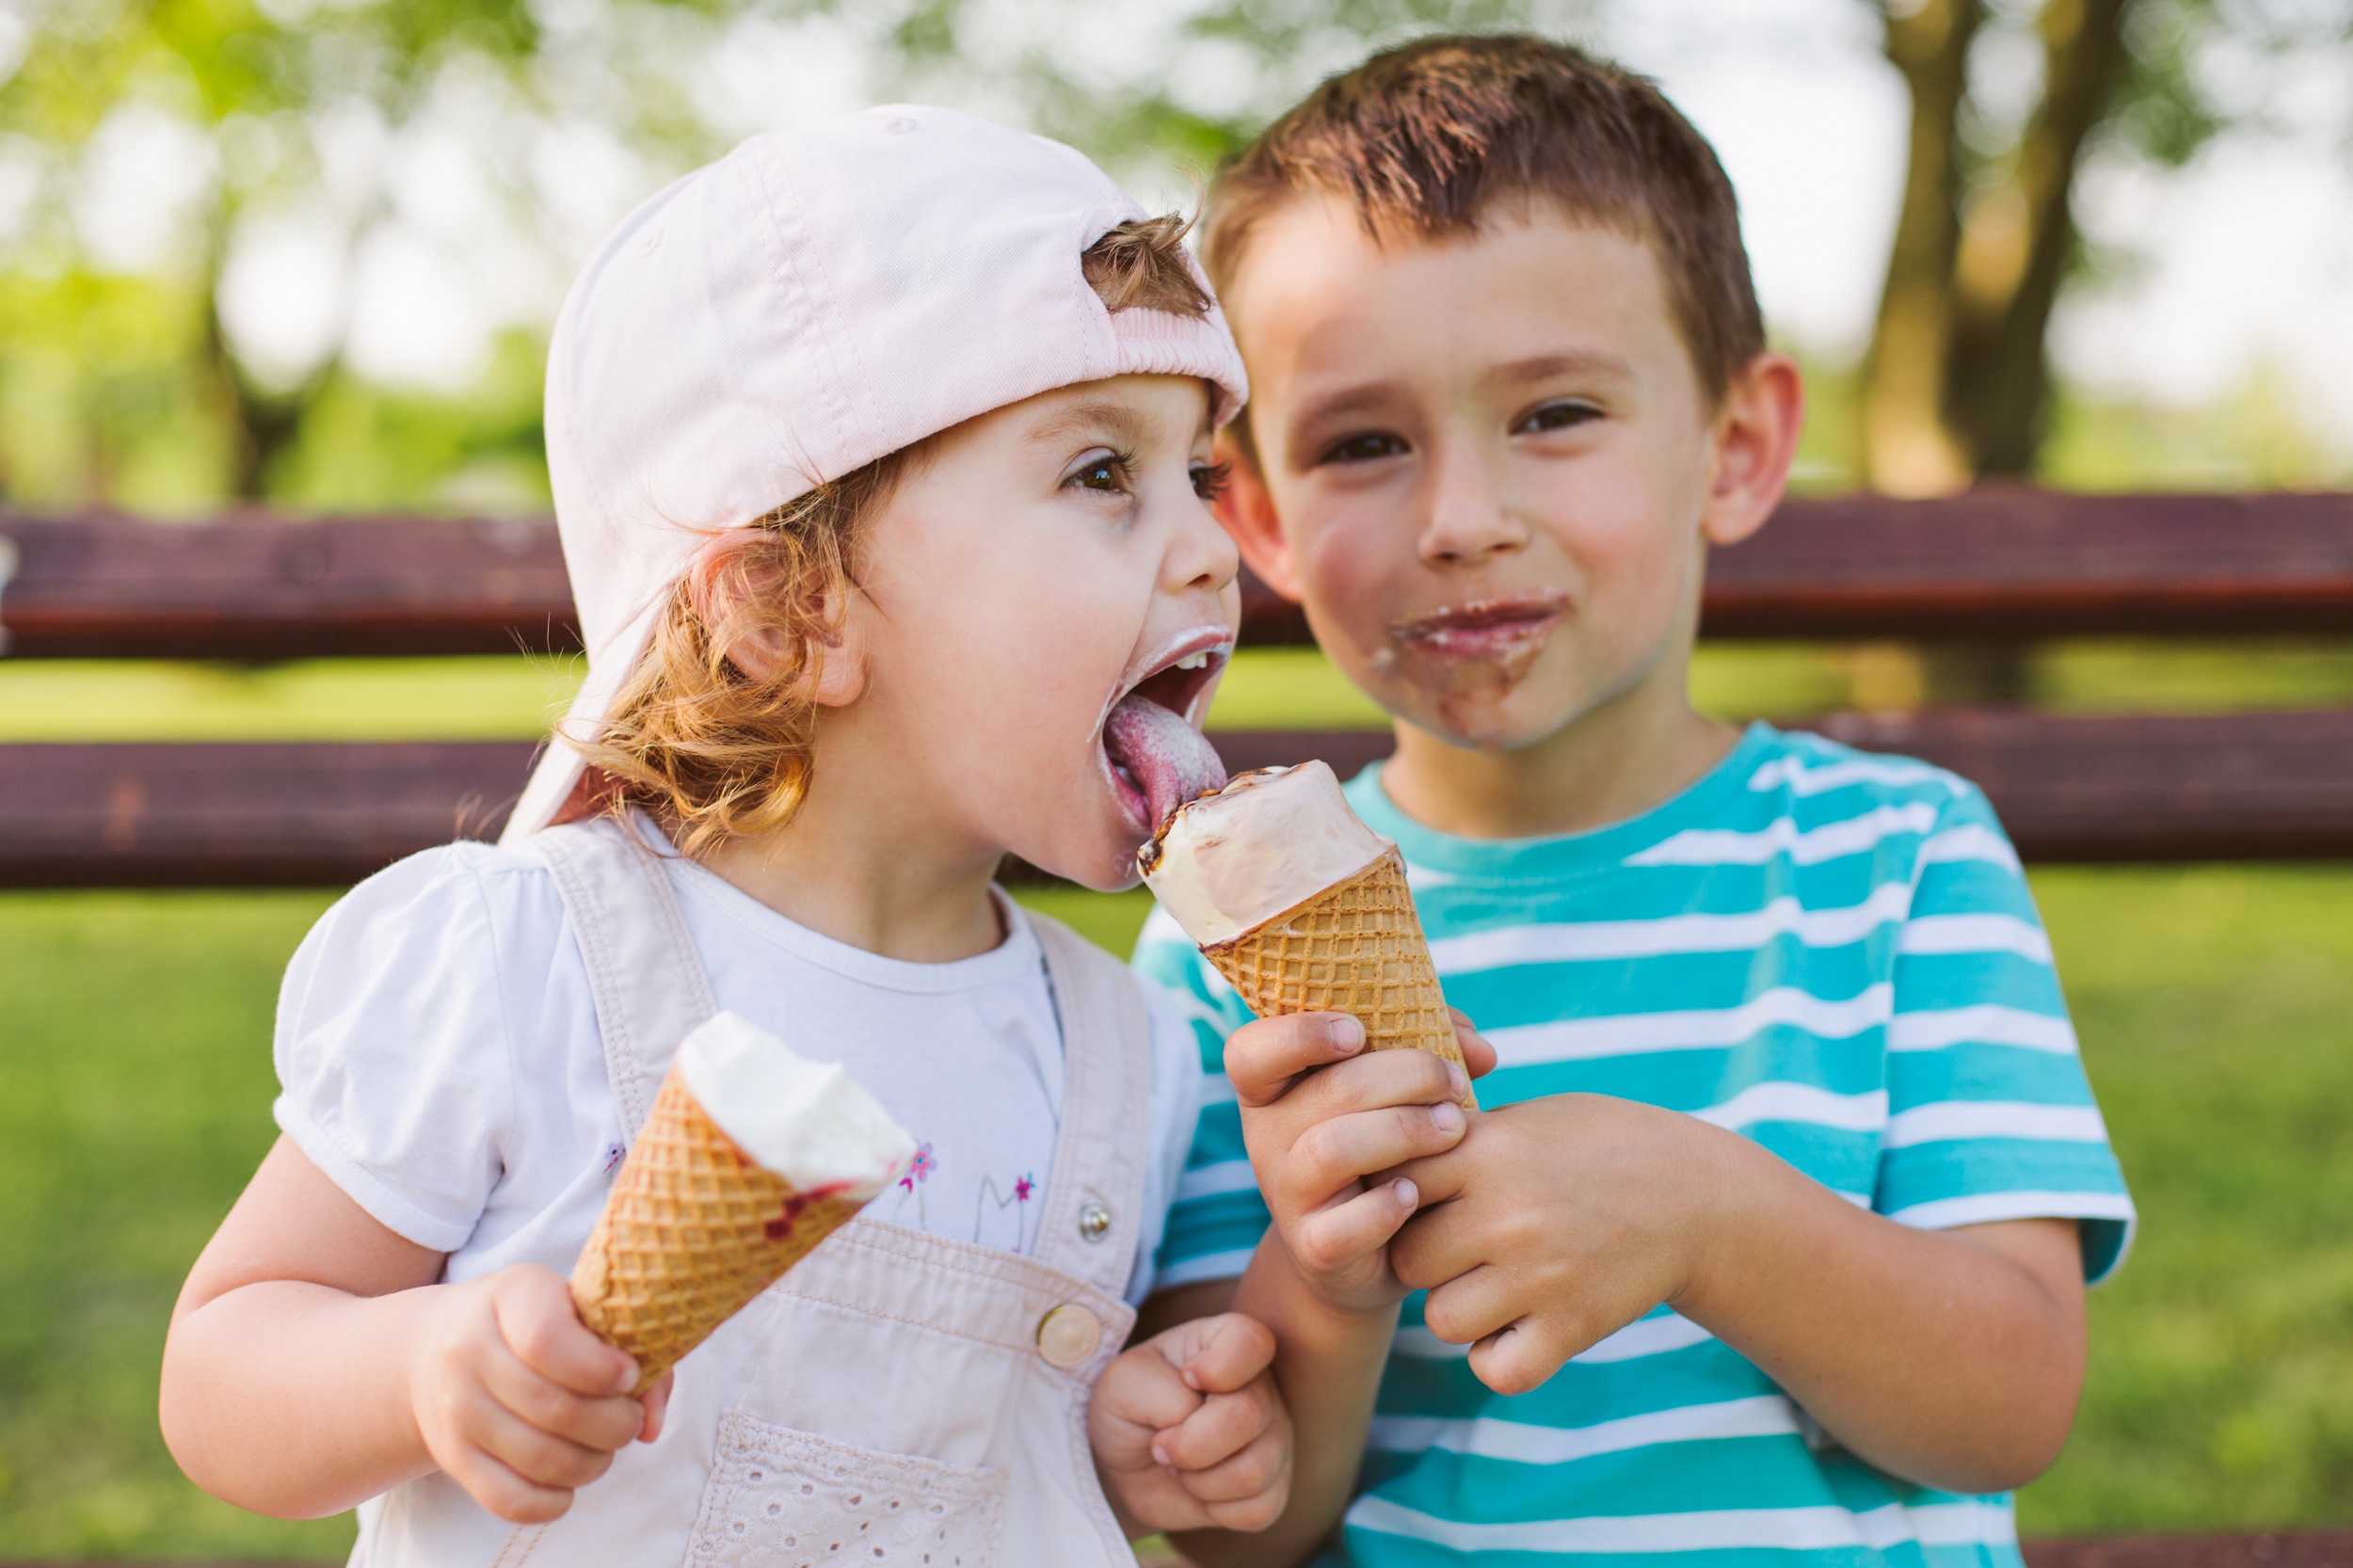 Two kids eating icecream